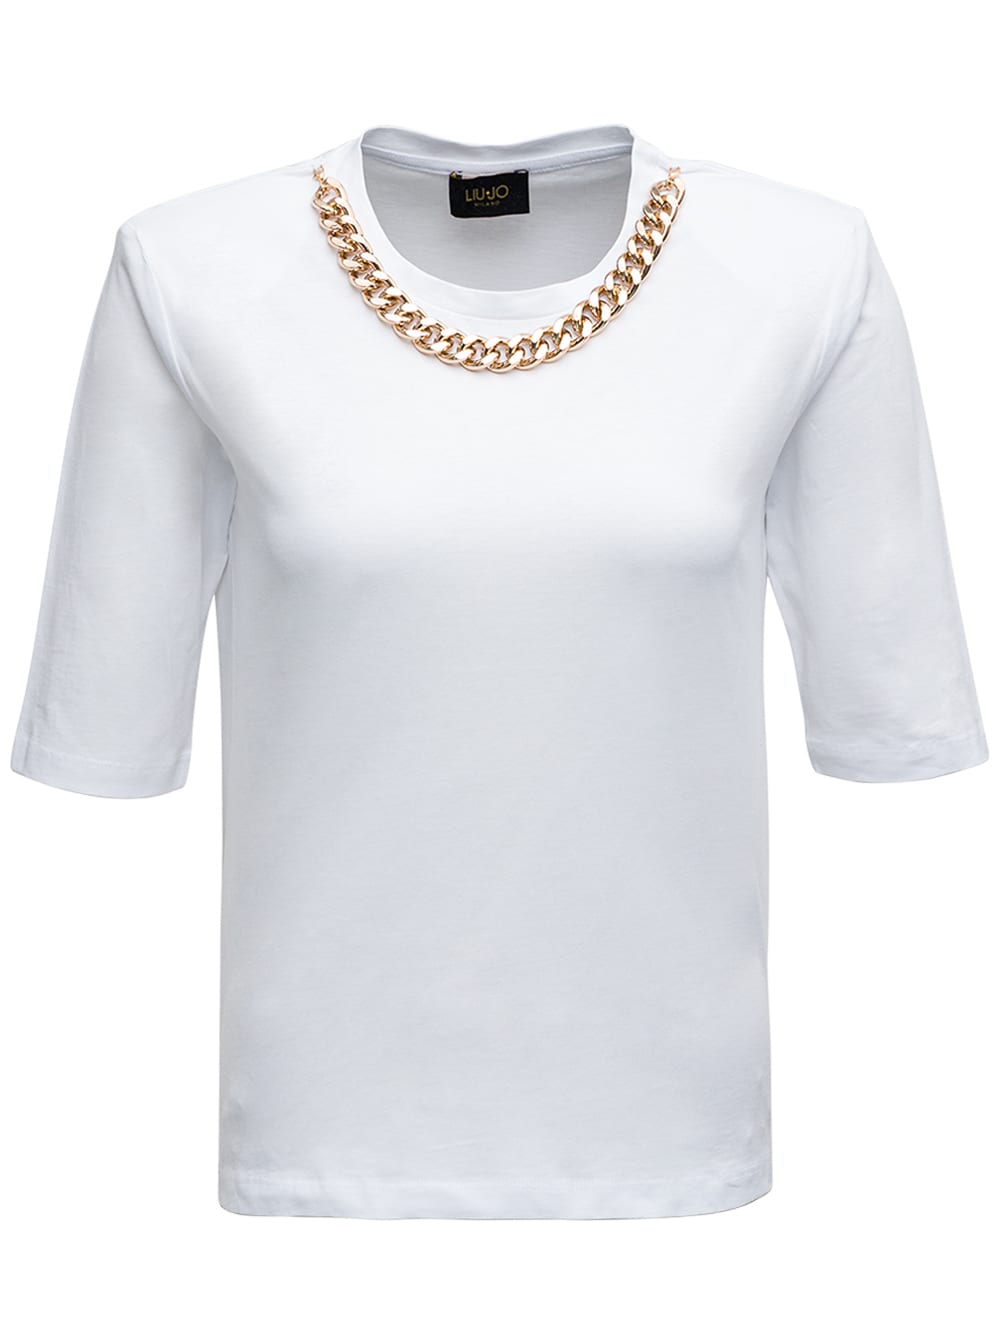 Liu-Jo White Cotton T-shirt With Chain Detail